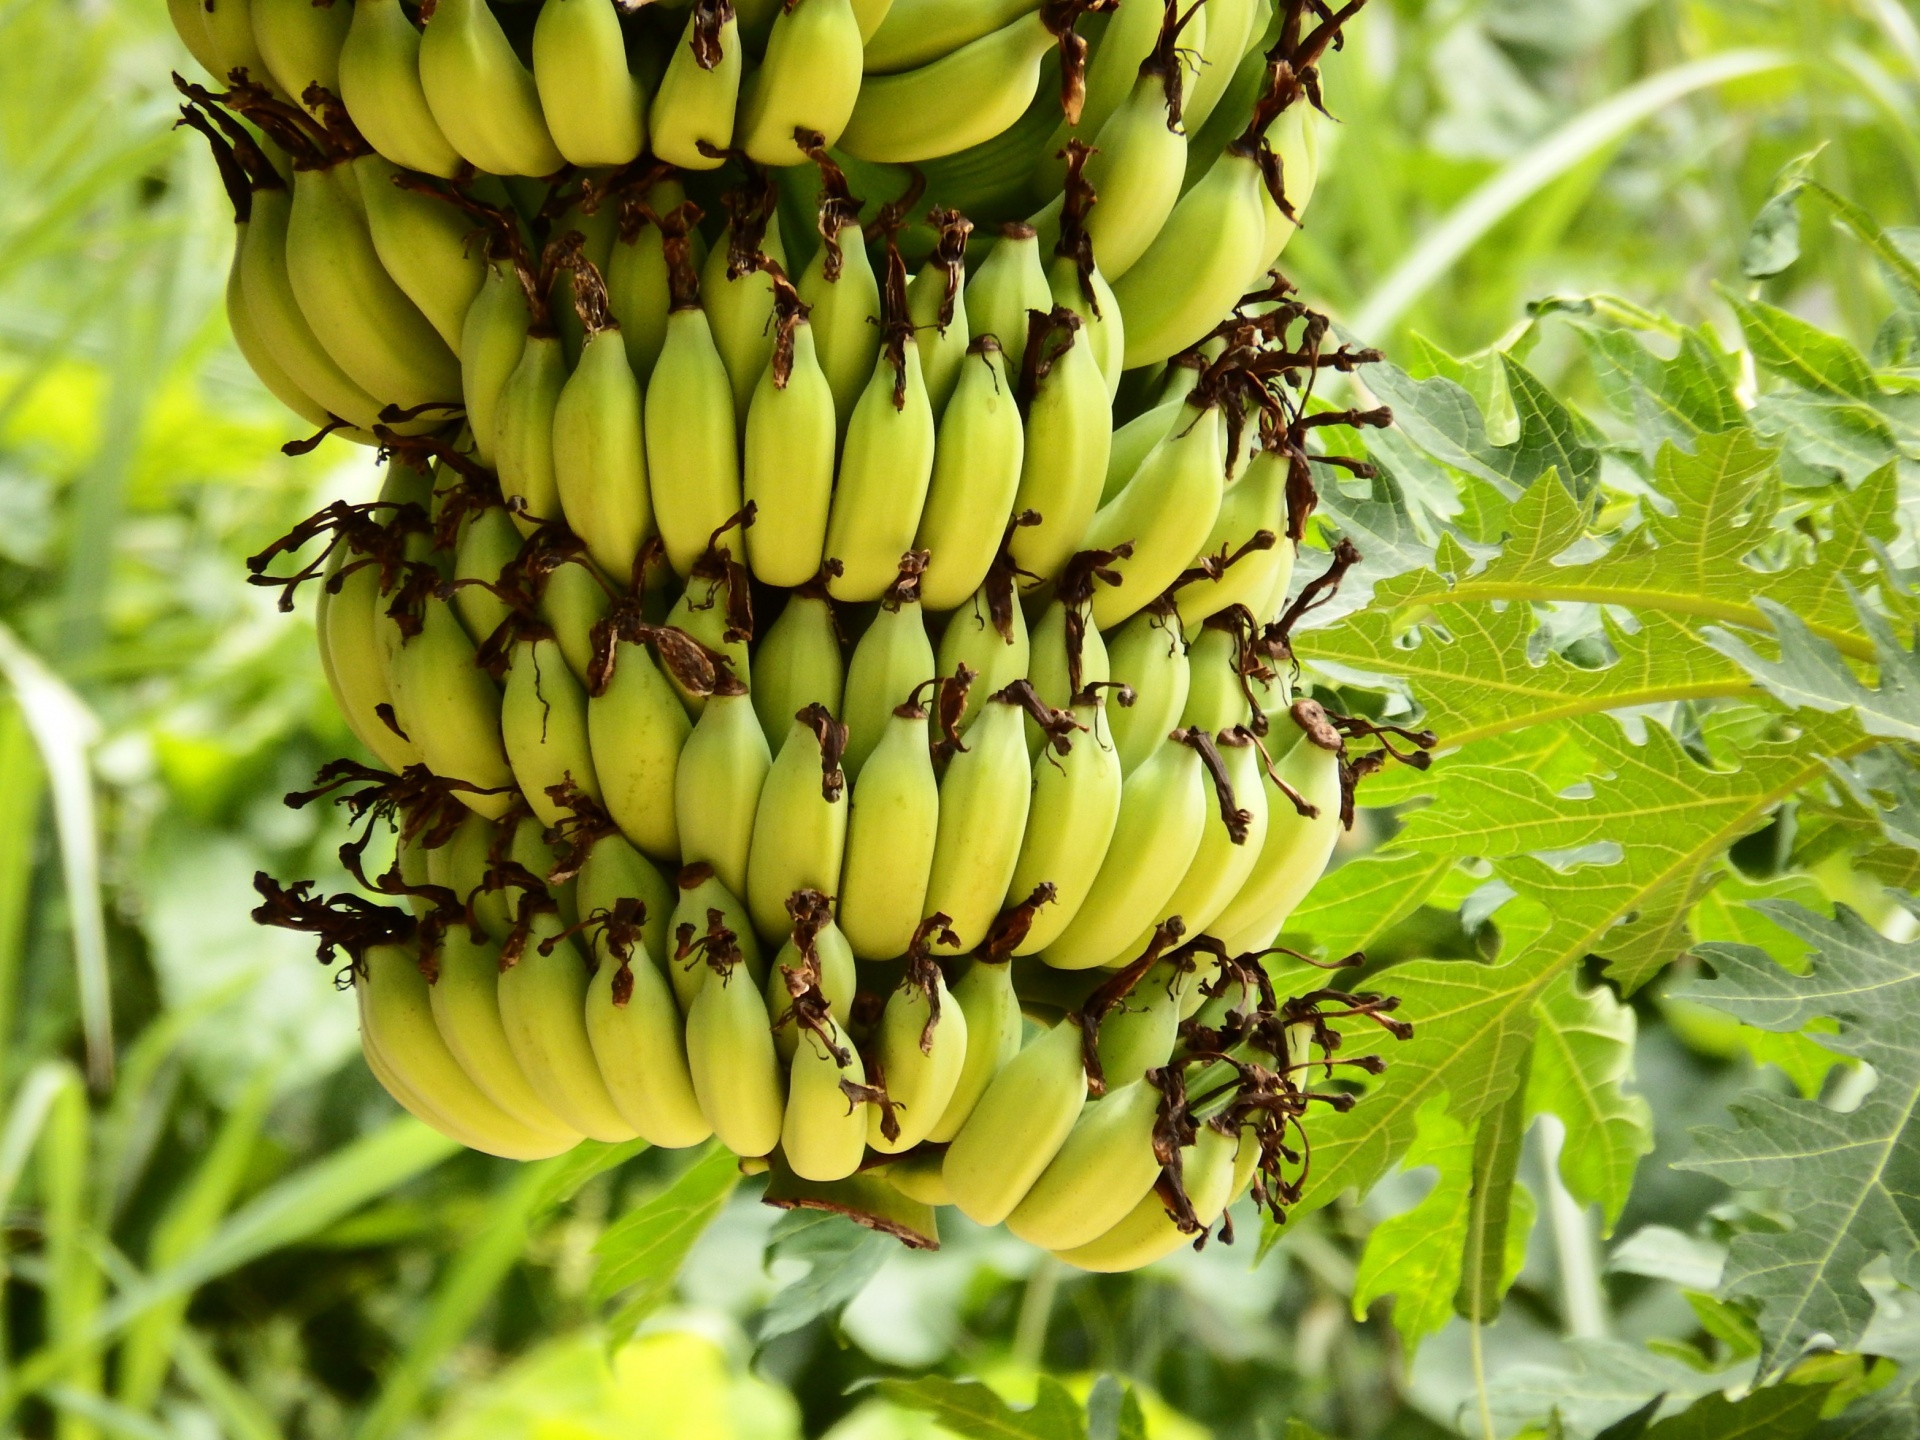 Fungus to fight banana pests - JCU Australia